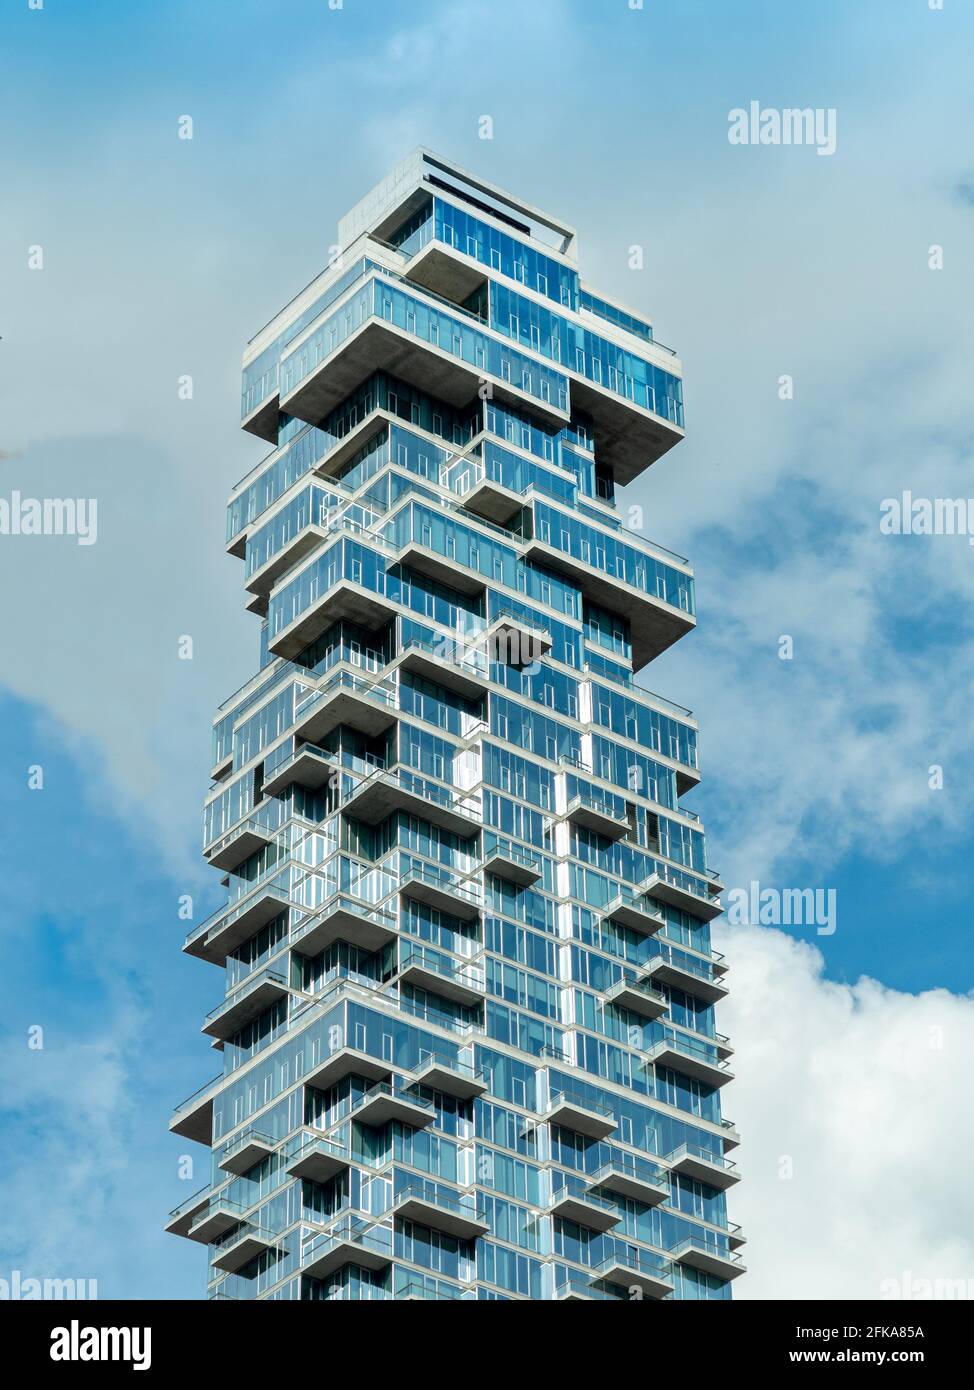 56 Leonard St apartment building designed by architecture firm Herzog & de Meuron, New York NY Stock Photo